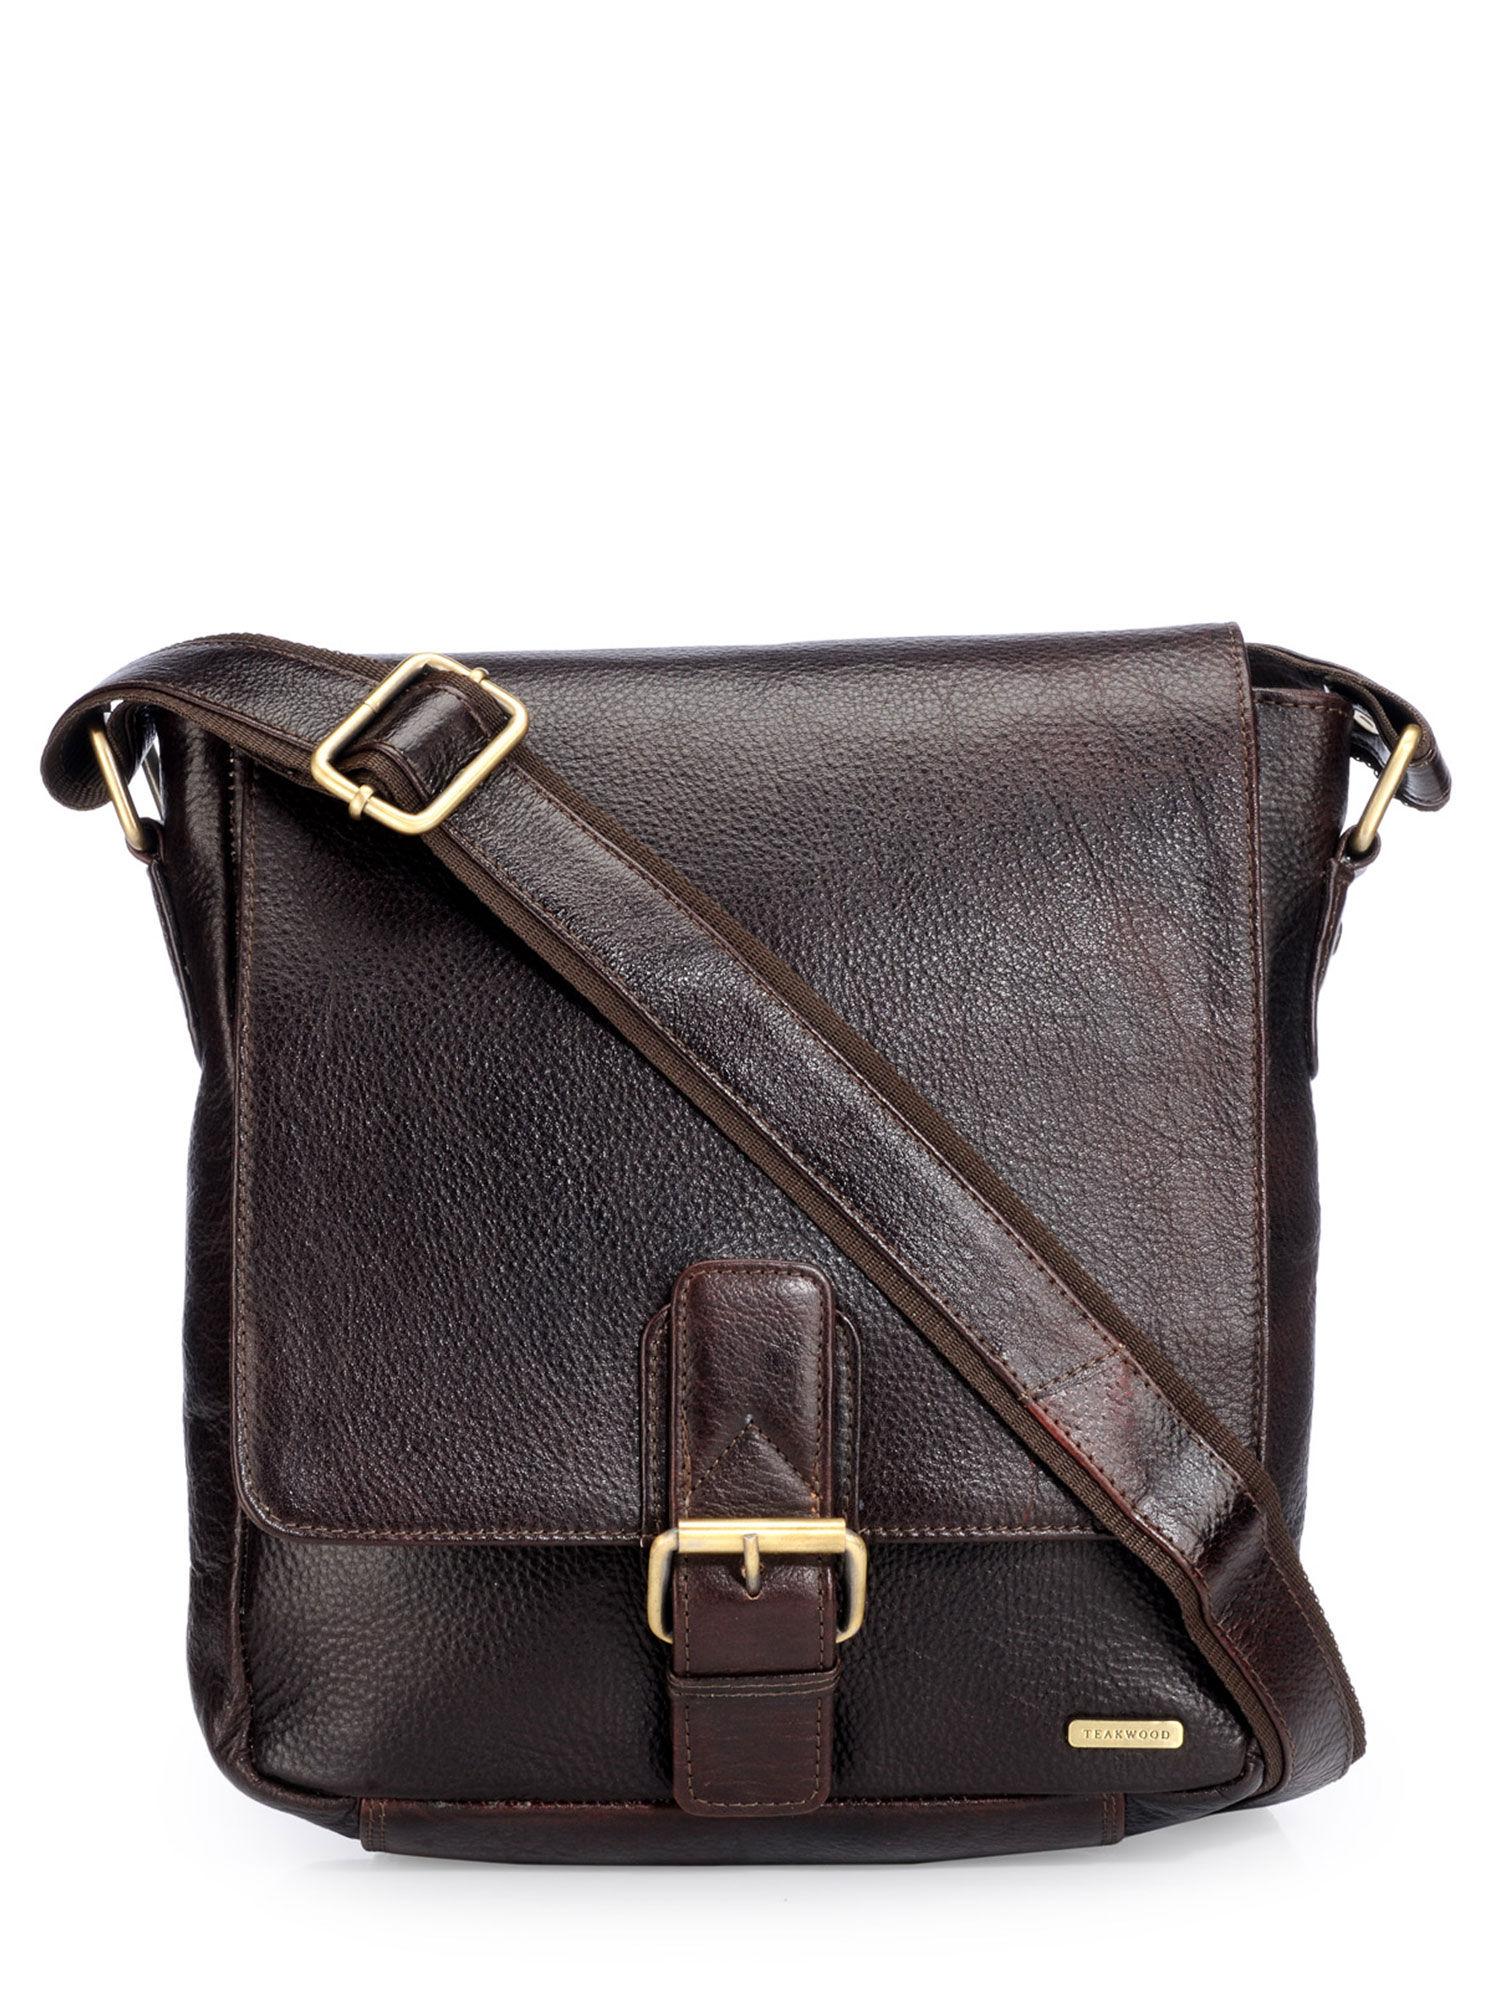 unisex brown genuine leather sling bag